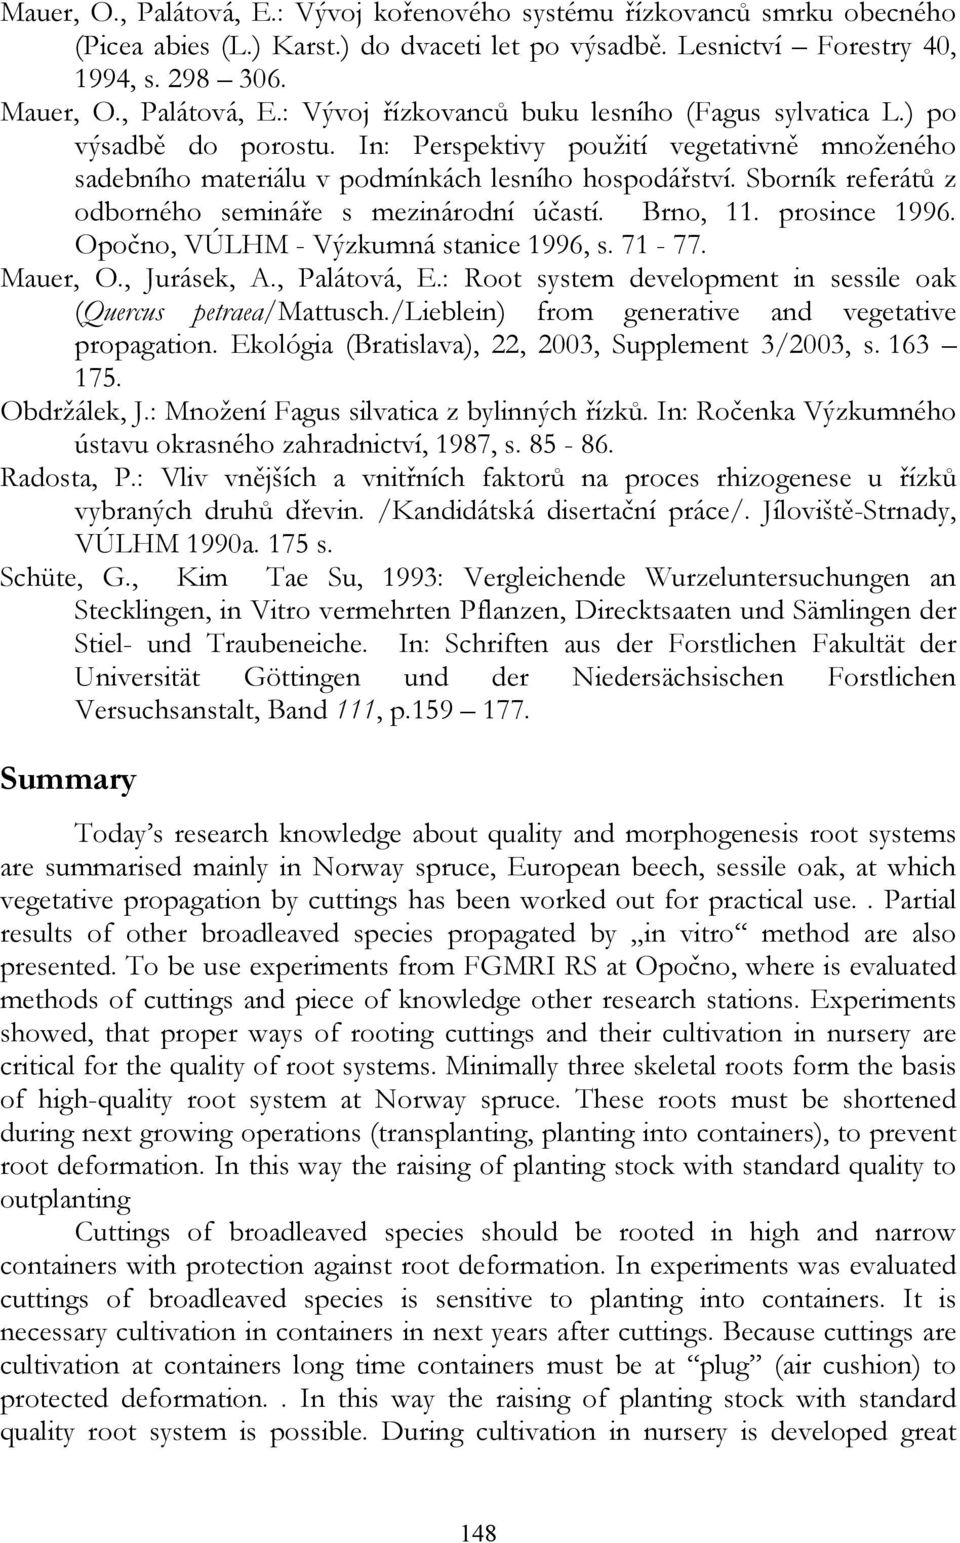 prosince 1996. Opočno, VÚLHM - Výzkumná stanice 1996, s. 71-77. Mauer, O., Jurásek, A., Palátová, E.: Root system development in sessile oak (Quercus petraea/mattusch.